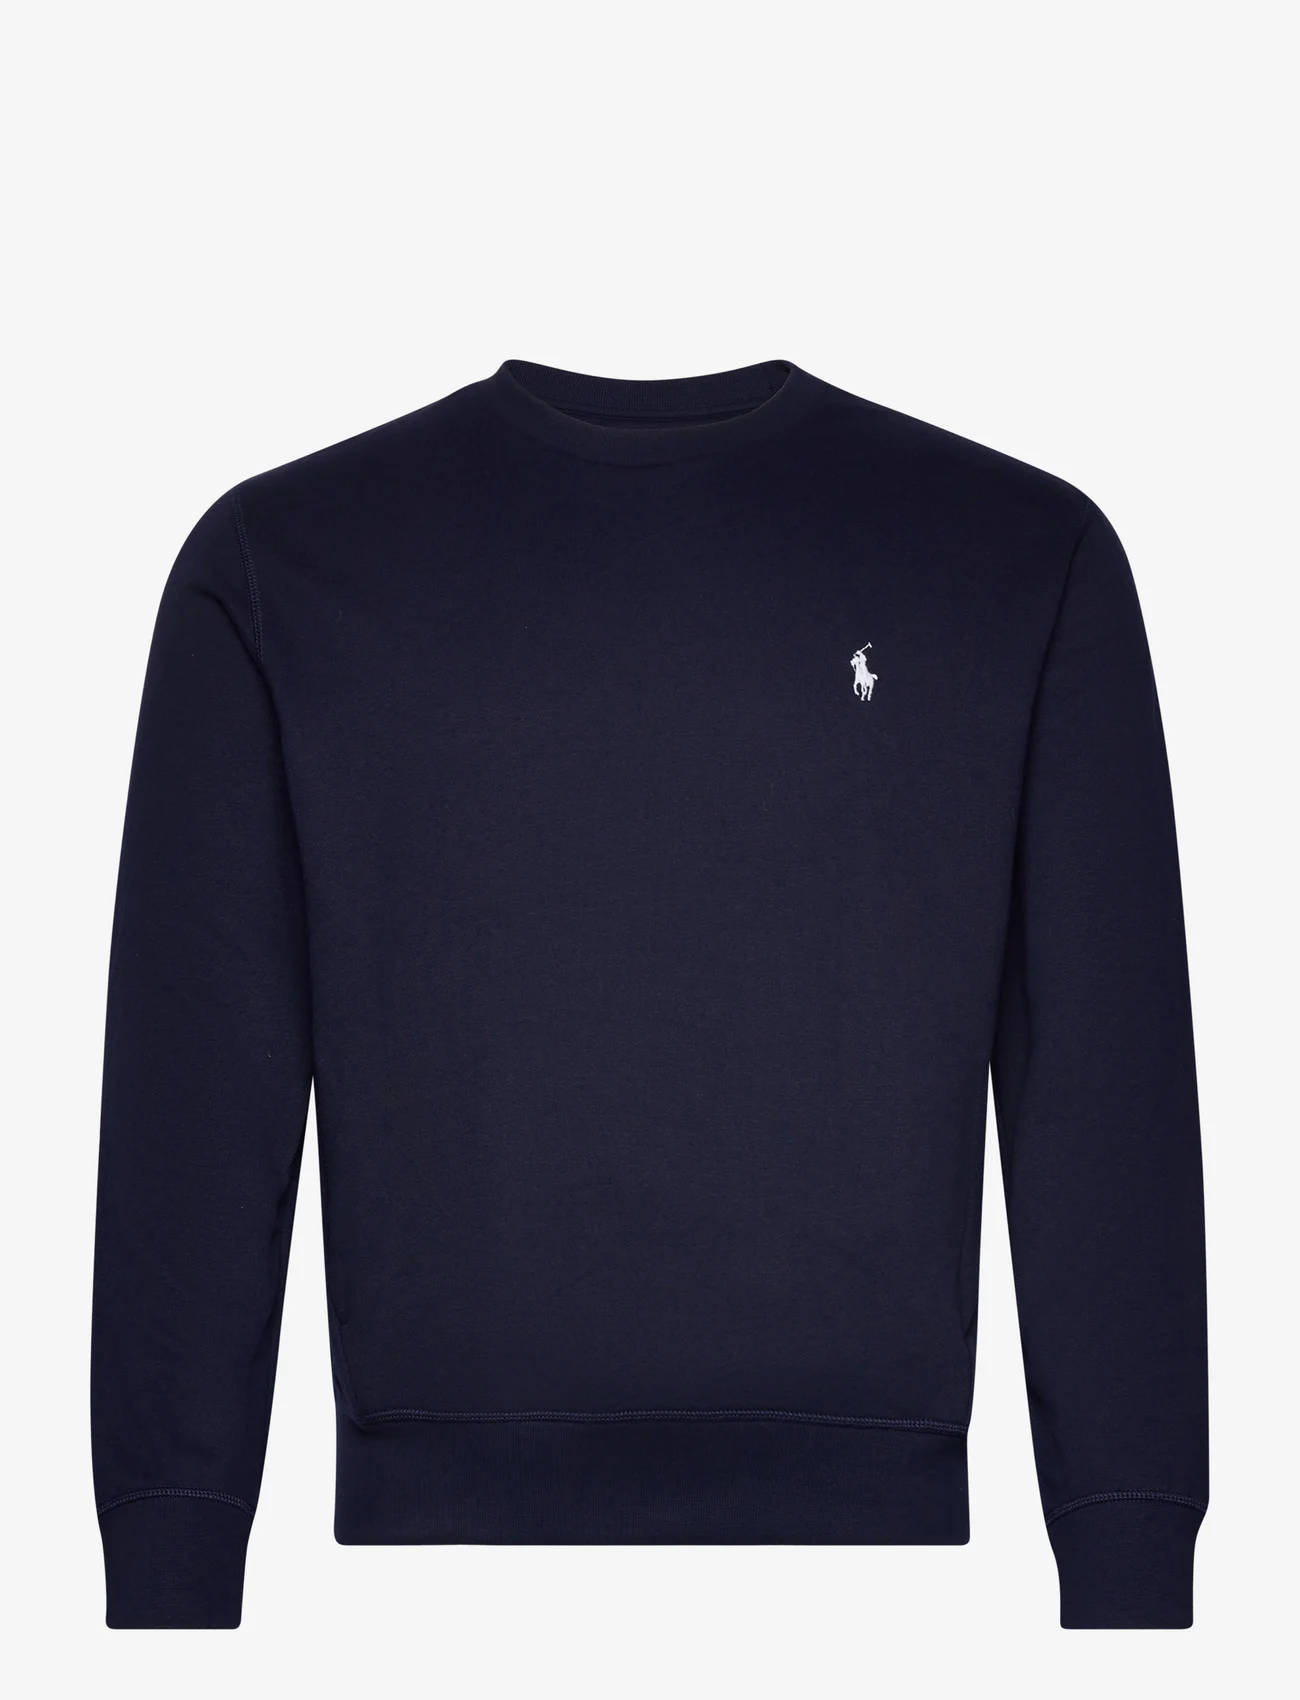 Polo Ralph Lauren - Classic Fit Performance Sweatshirt - megzti laisvalaikio drabužiai - refined navy - 0